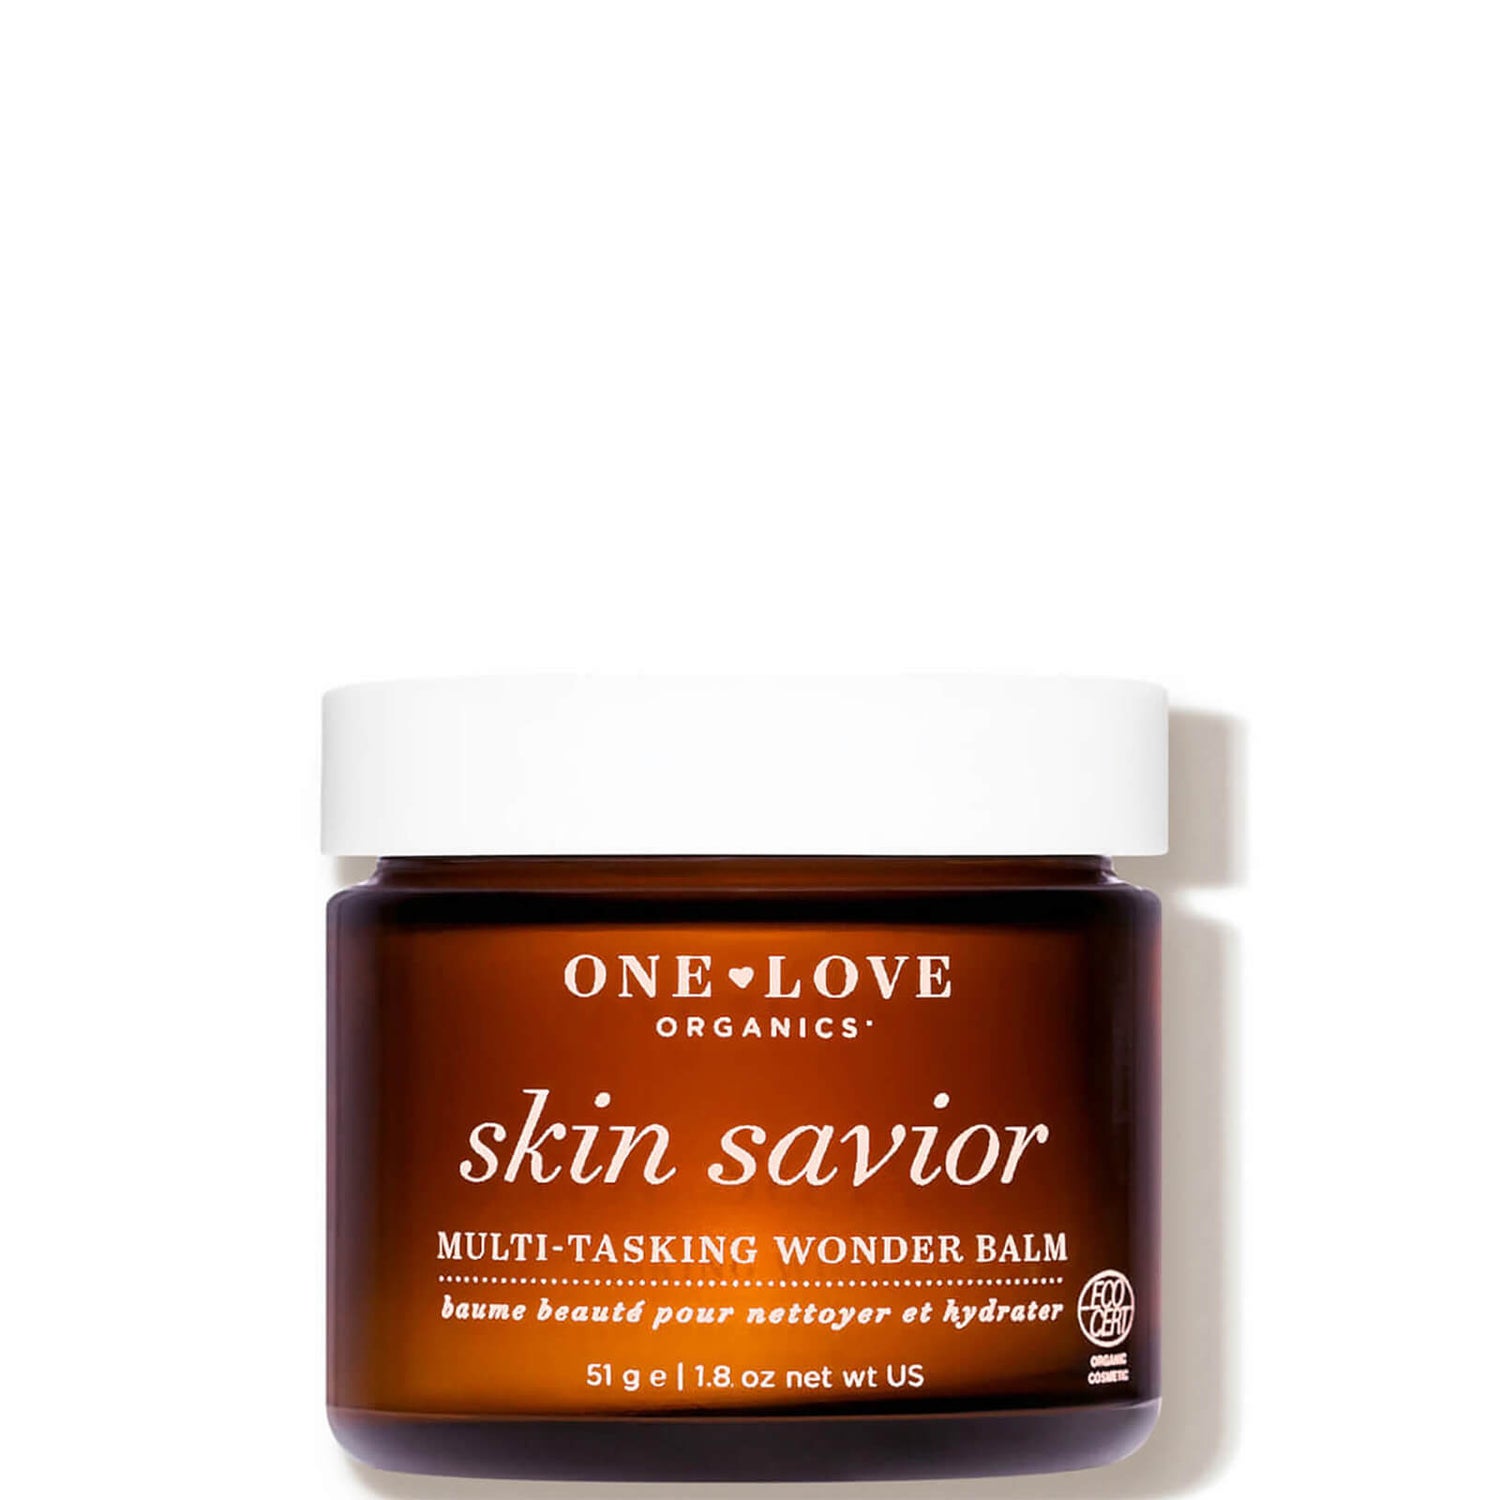 One Love Organics Skin Savior Waterless Beauty Balm (1.8 oz.)